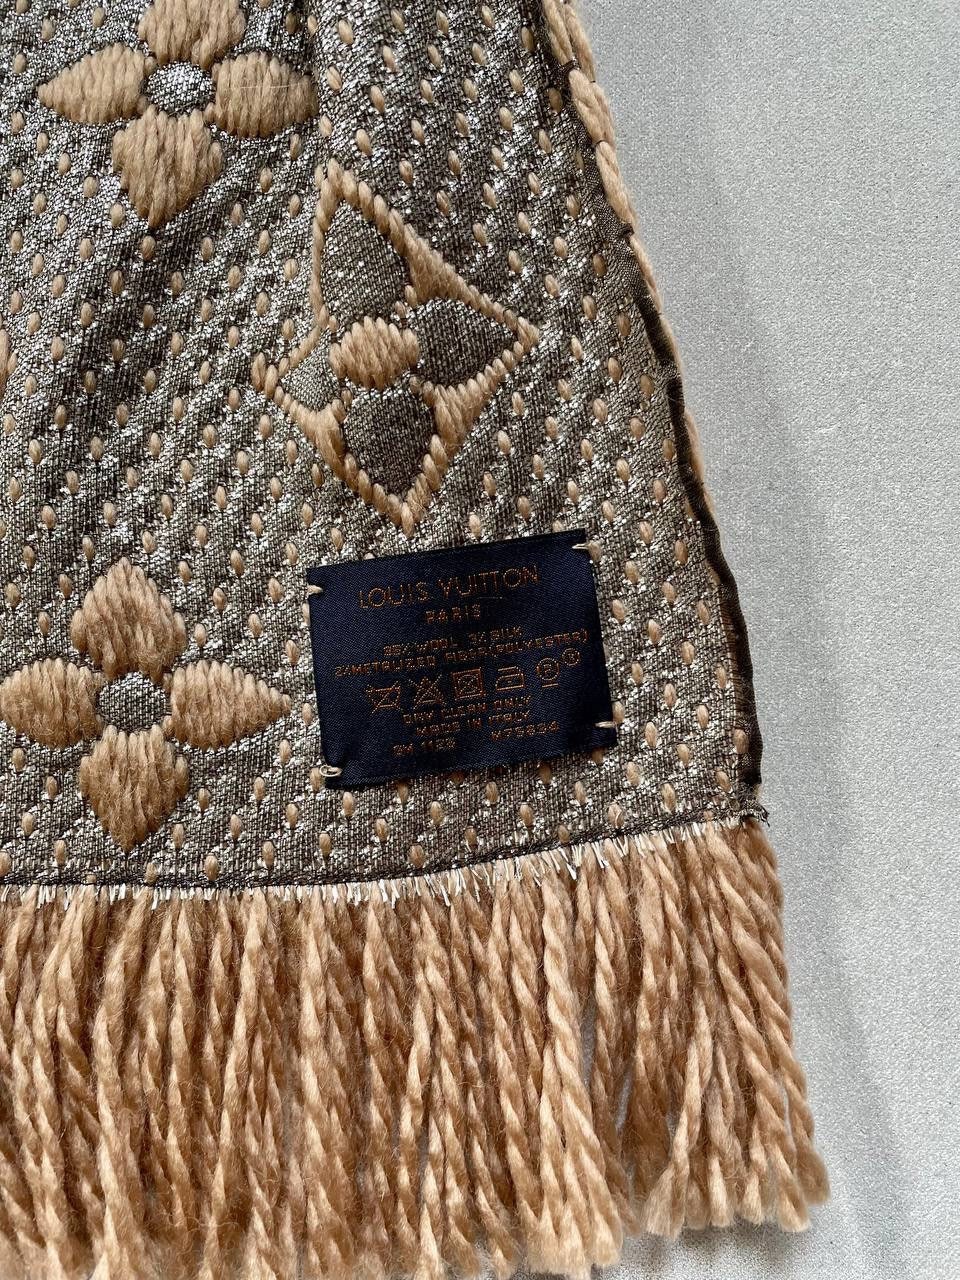 Vintage Logomania Louis Vuitton Wool and Silk Scarf Louis 